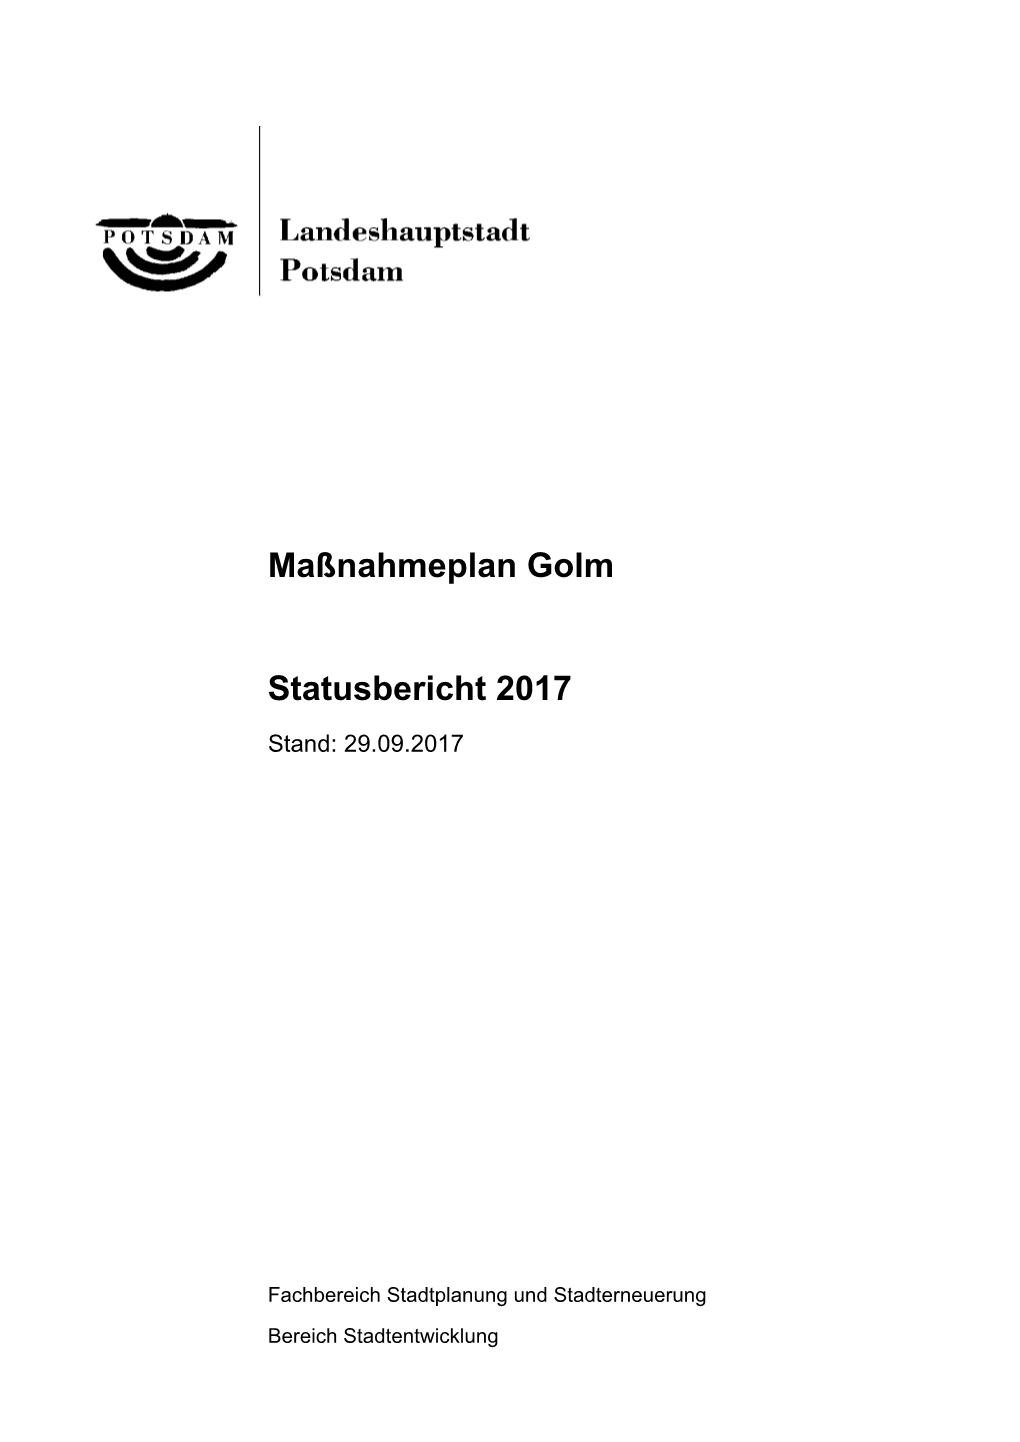 Maßnahmeplan Golm Statusbericht 2017